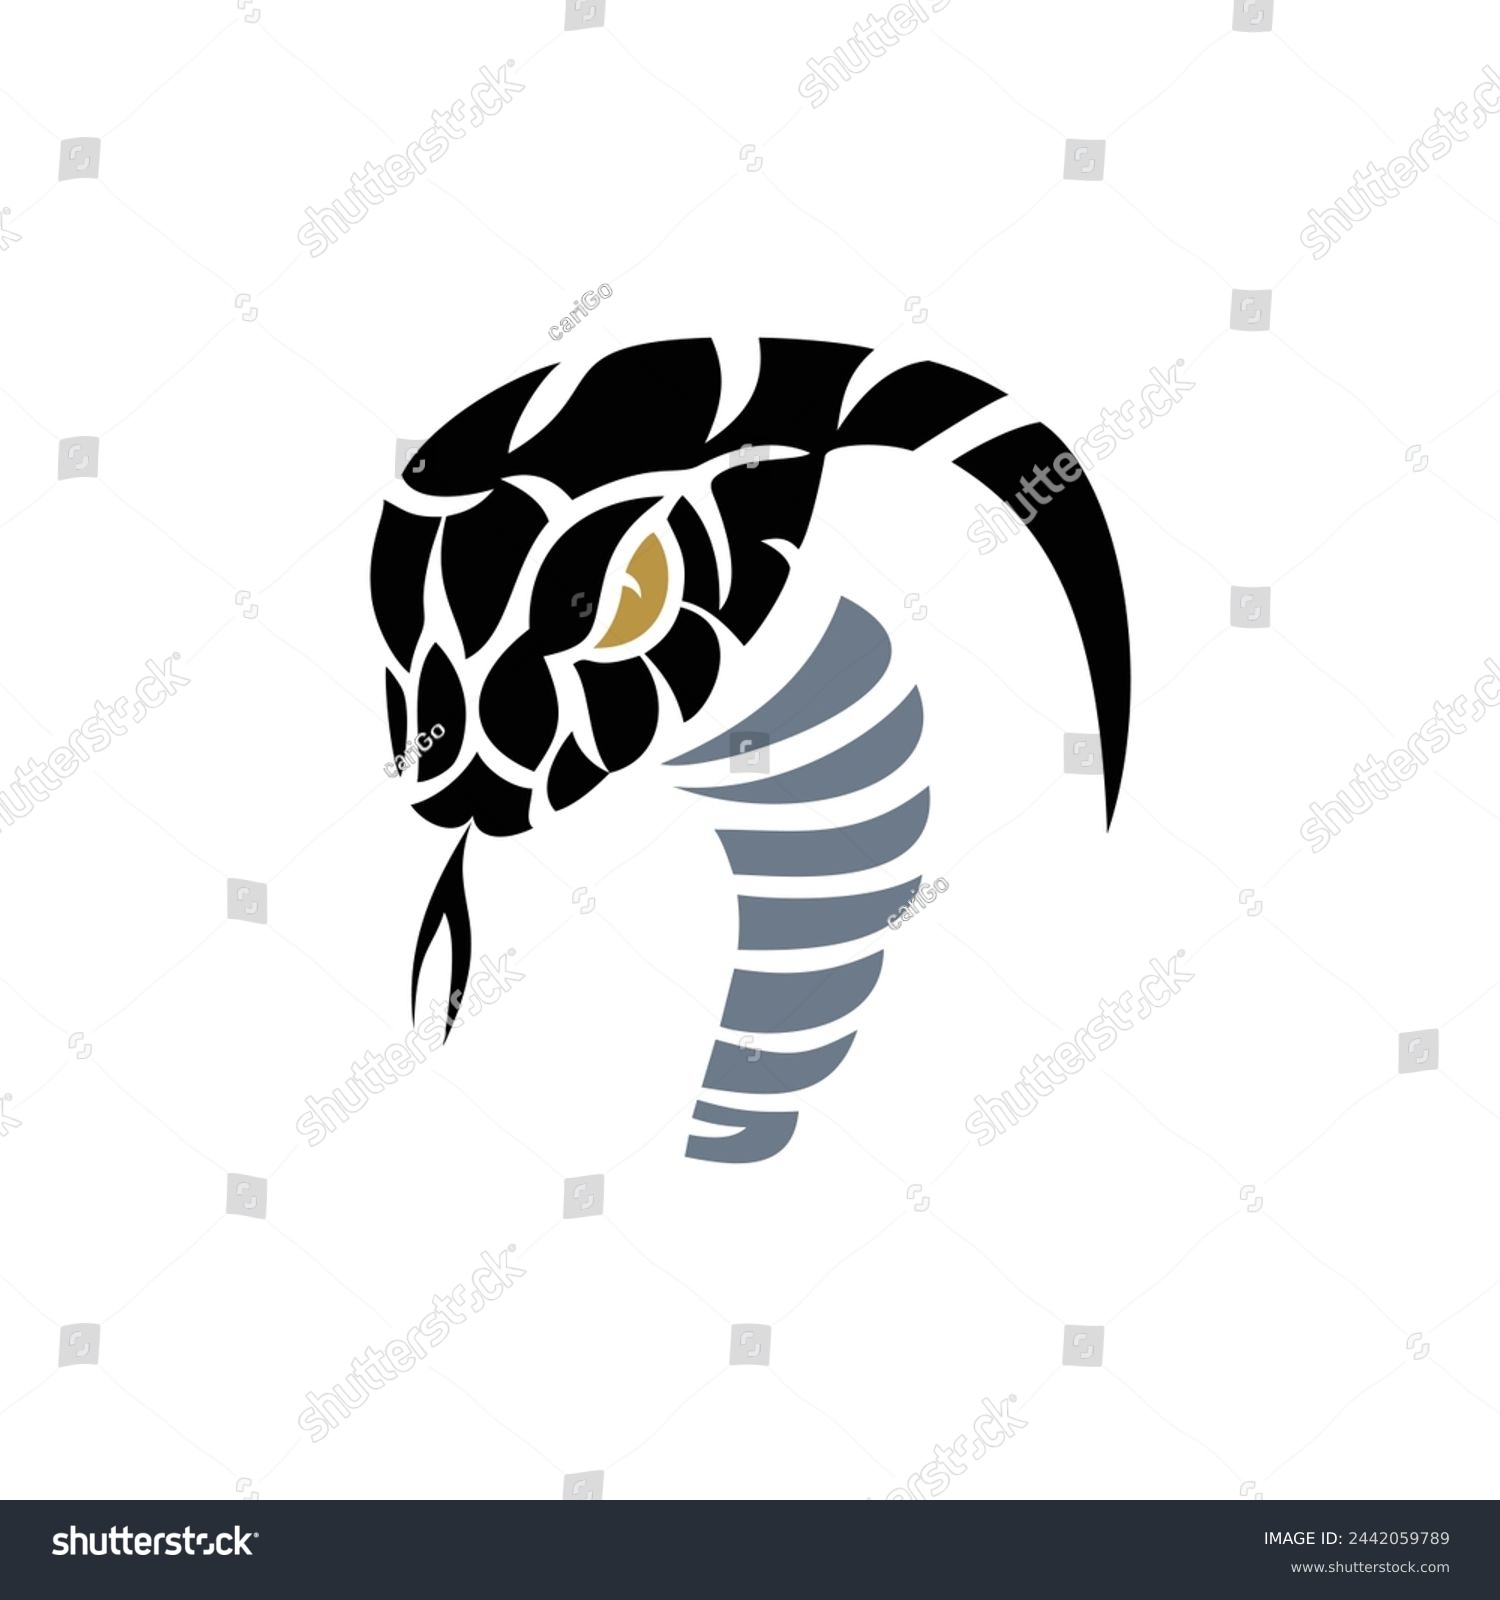 SVG of snake head with gold eye logo concept designs. svg